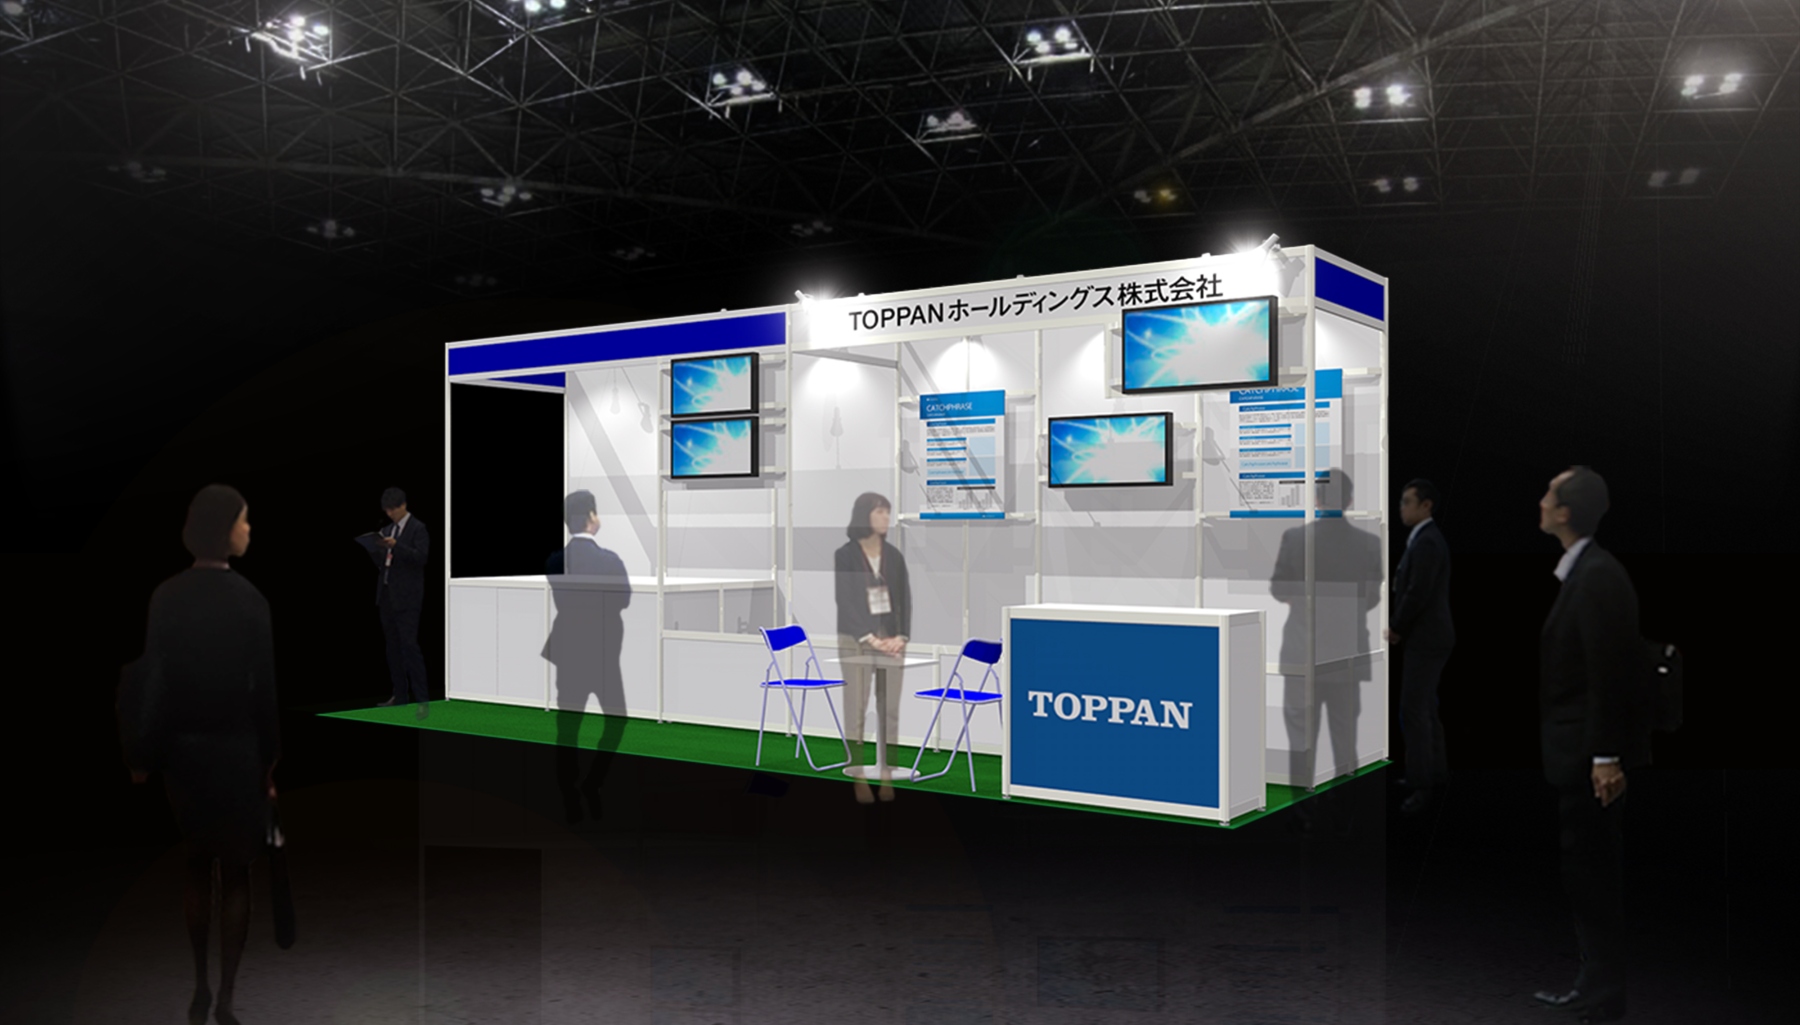 TOPPANブースイメージ © TOPPAN Holdings Inc.